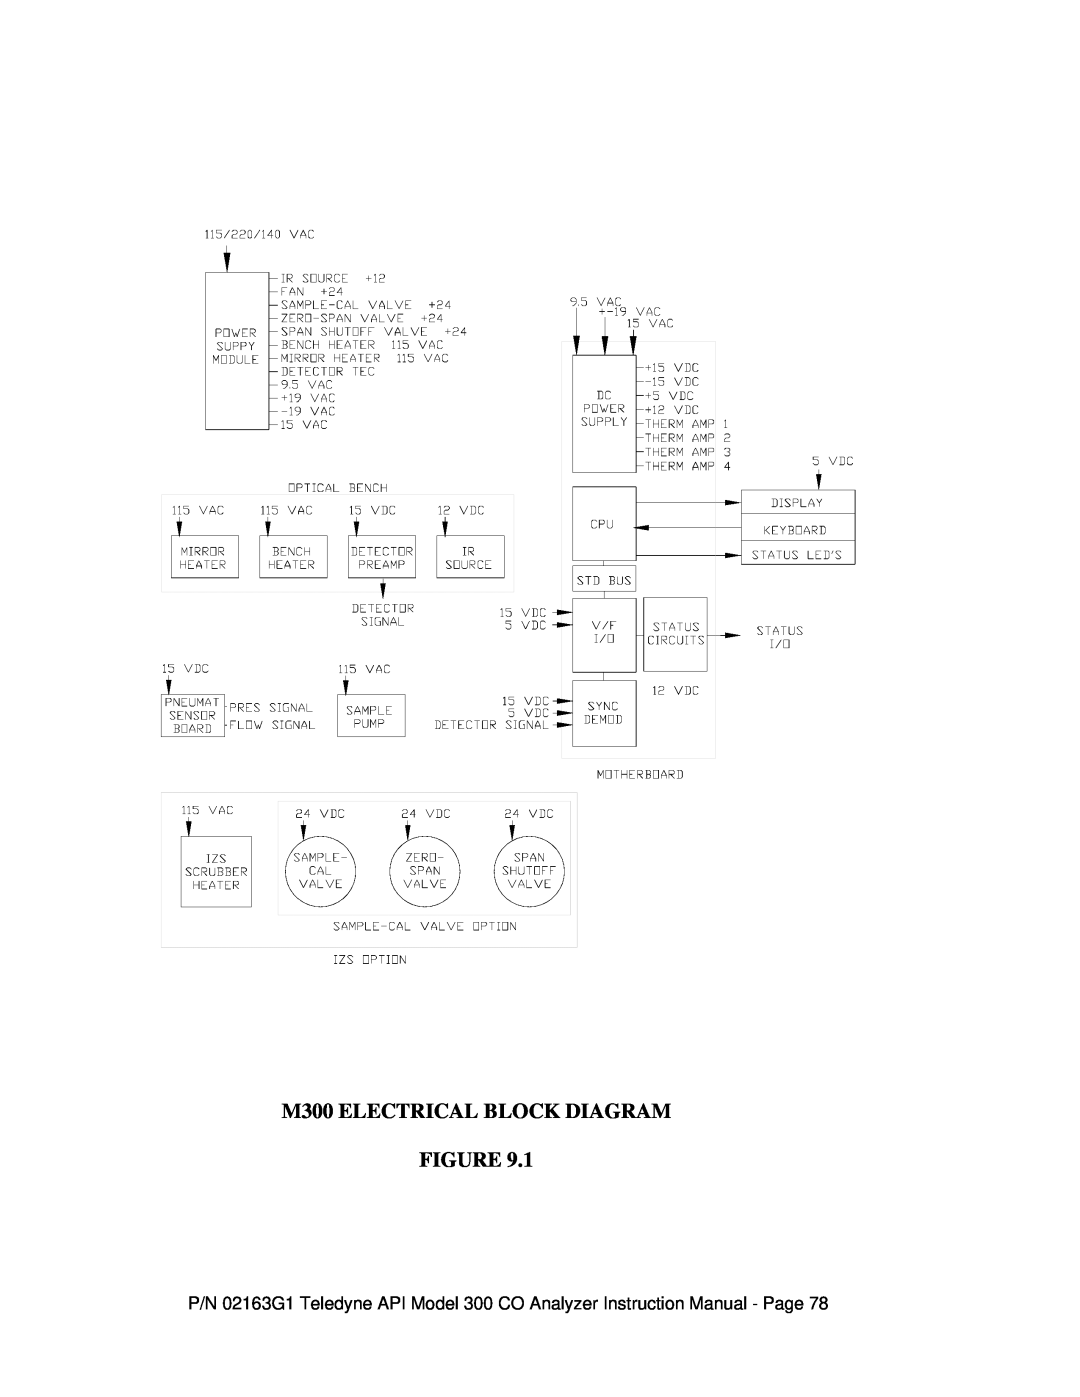 Teledyne instruction manual M300 ELECTRICAL BLOCK DIAGRAM FIGURE 